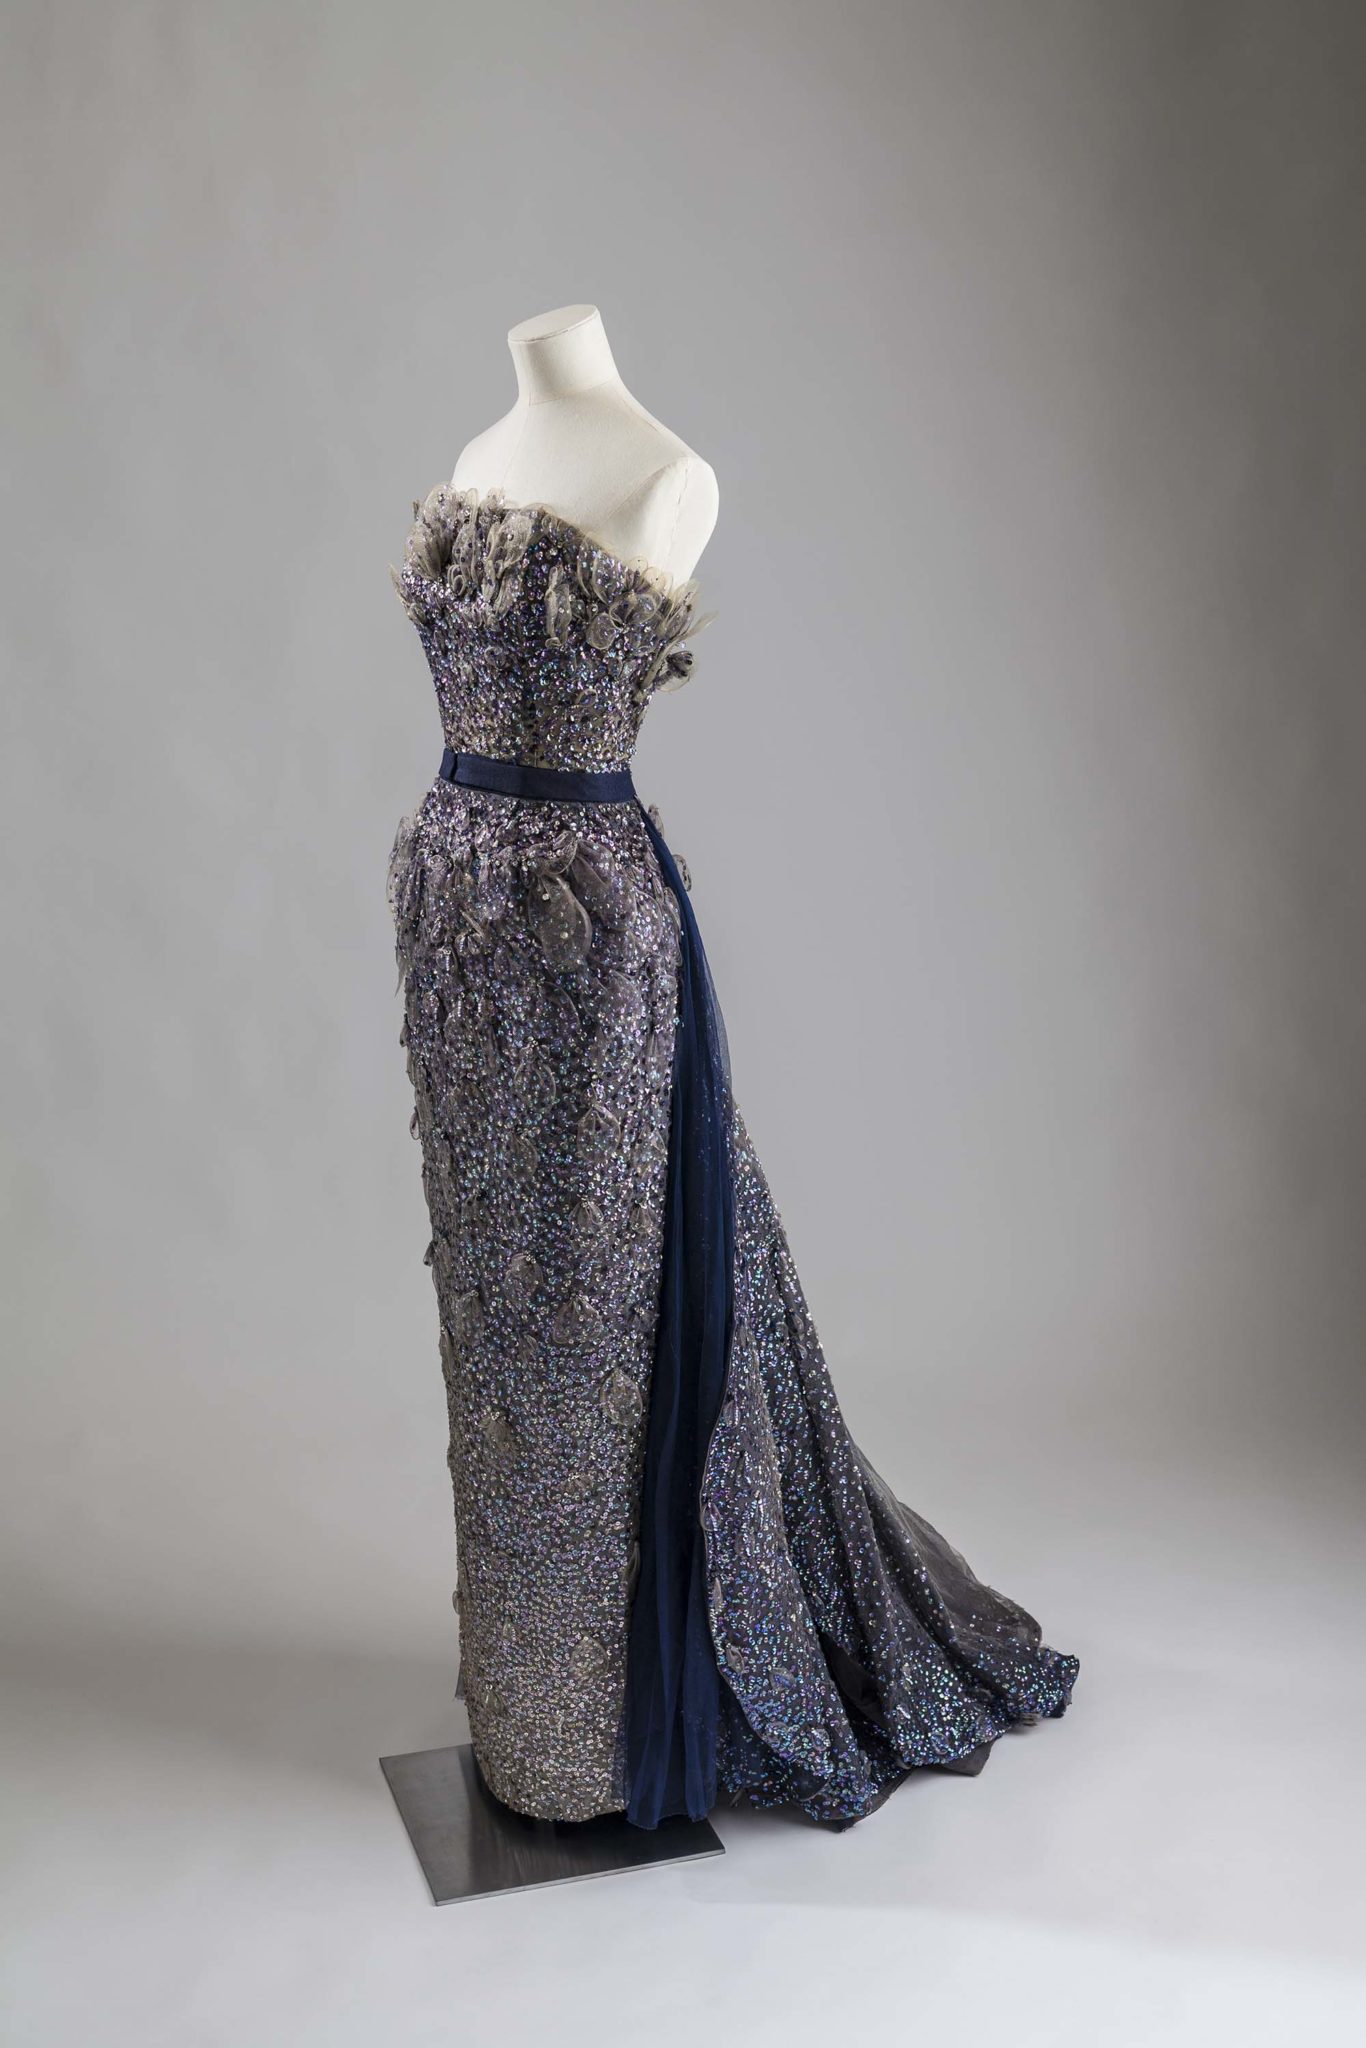 Christian Dior New York evening gown, c. 1953-55 - FIDM Museum